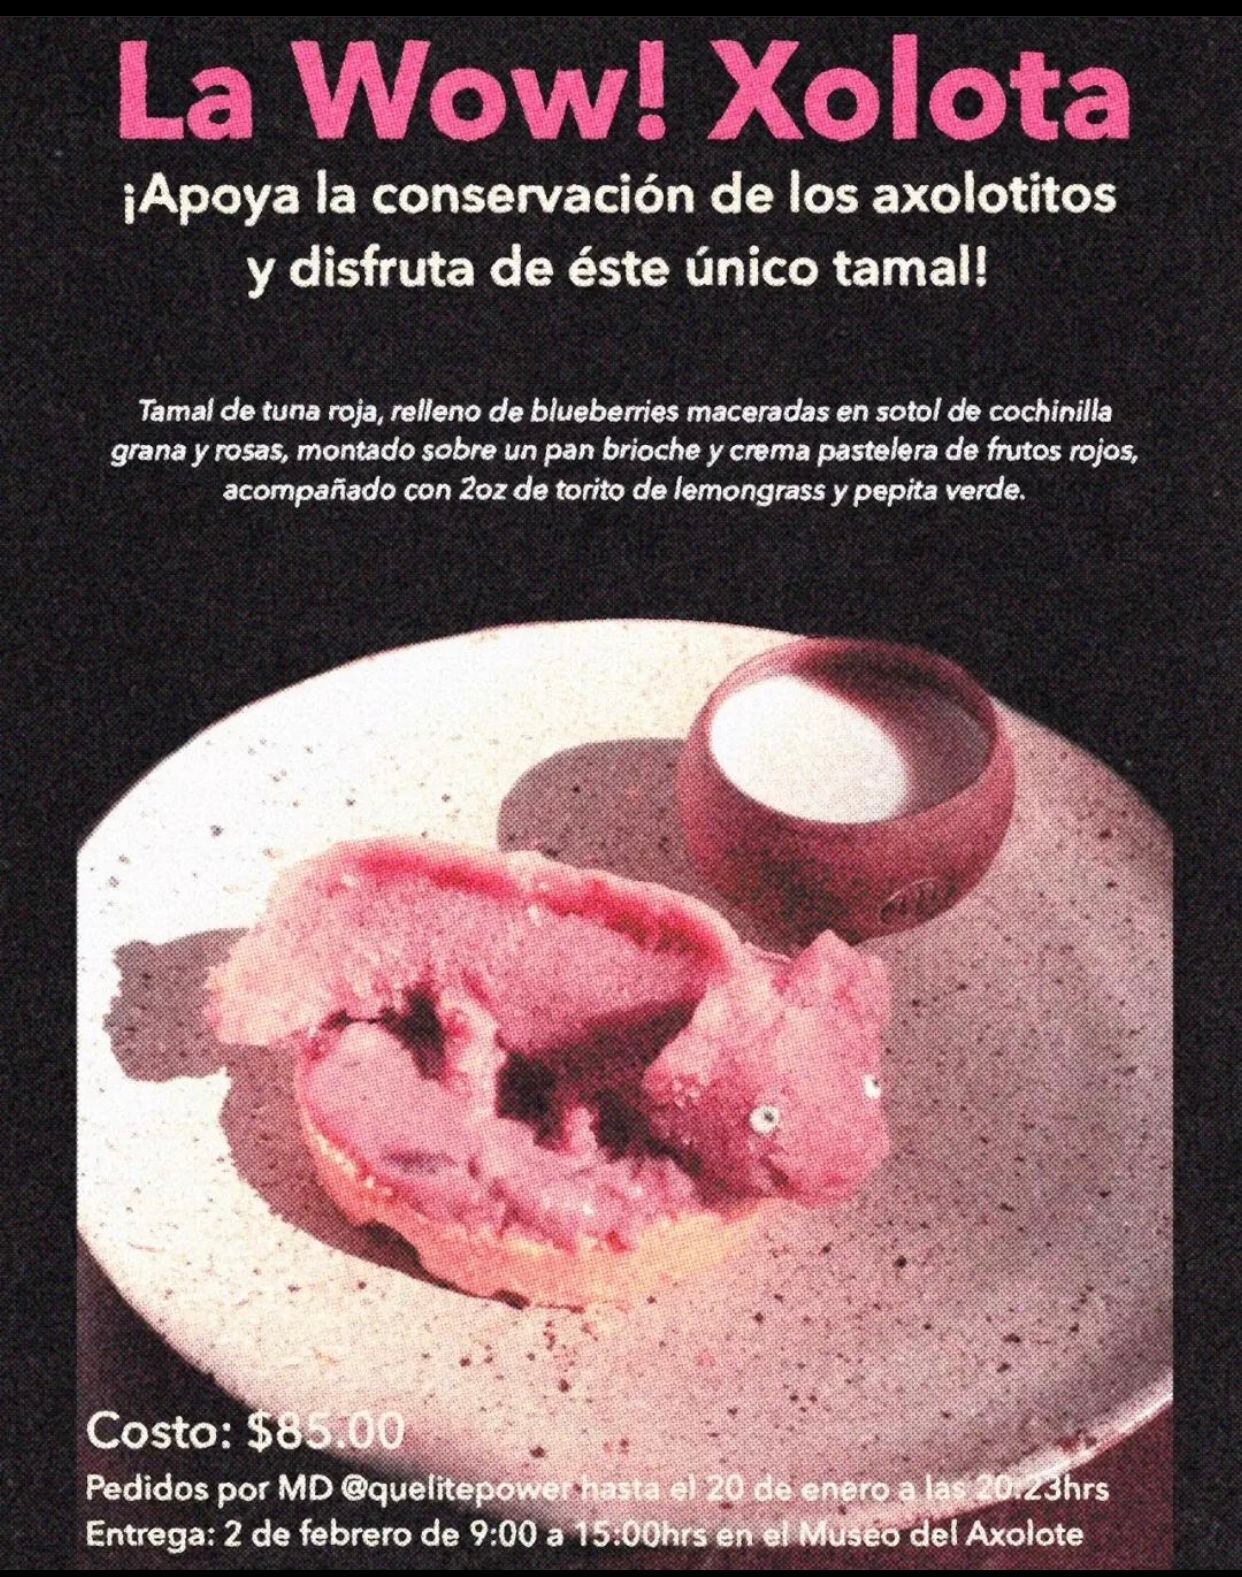 La Wow Xolota tiene forma del anfibio mexicano. (Foto: Instagram / @quelitepower)